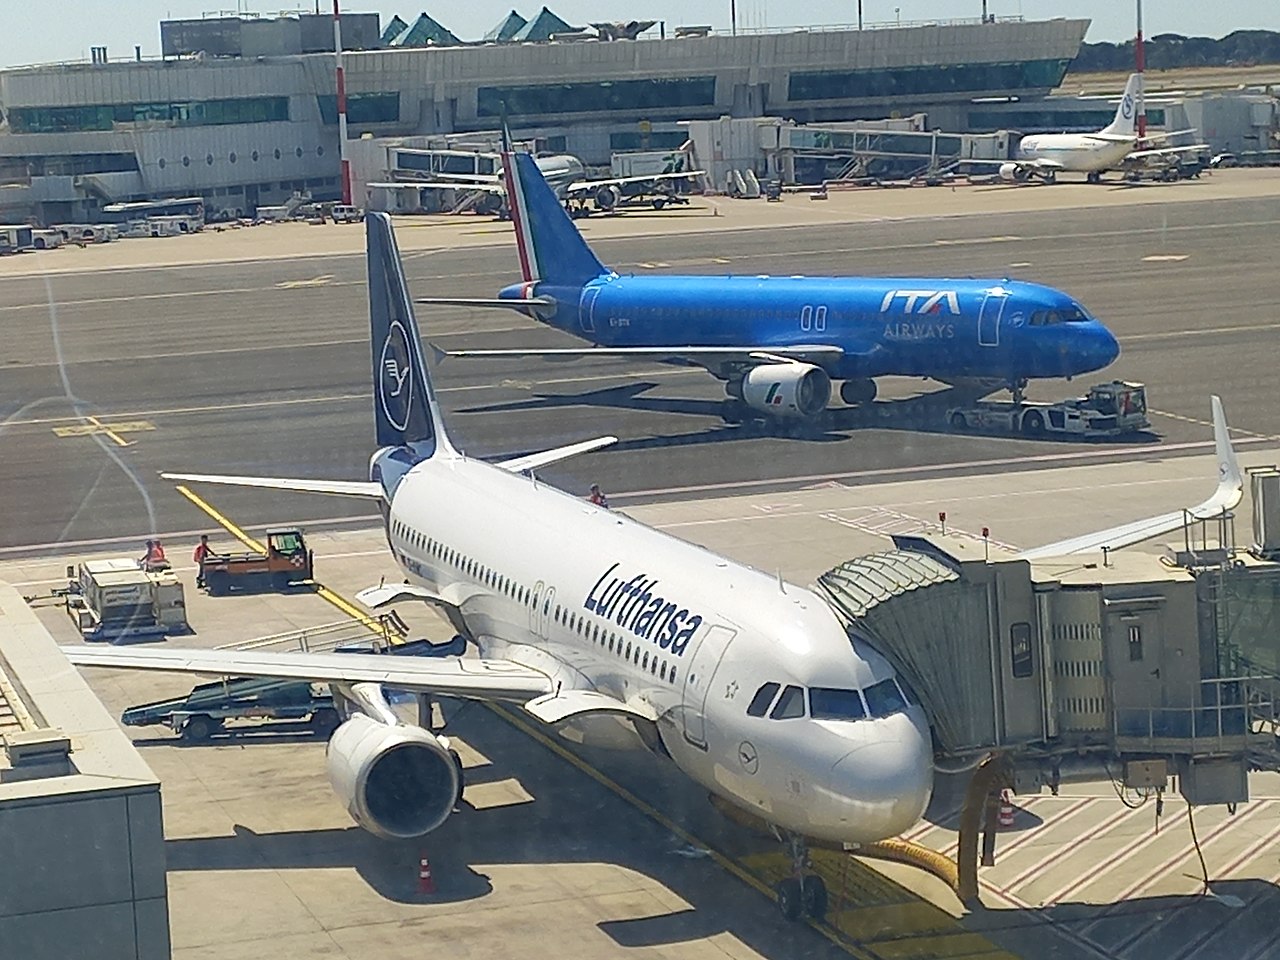 An ITA Airways aircraft taxies past a Lufthansa aircraft parked at the terminal.